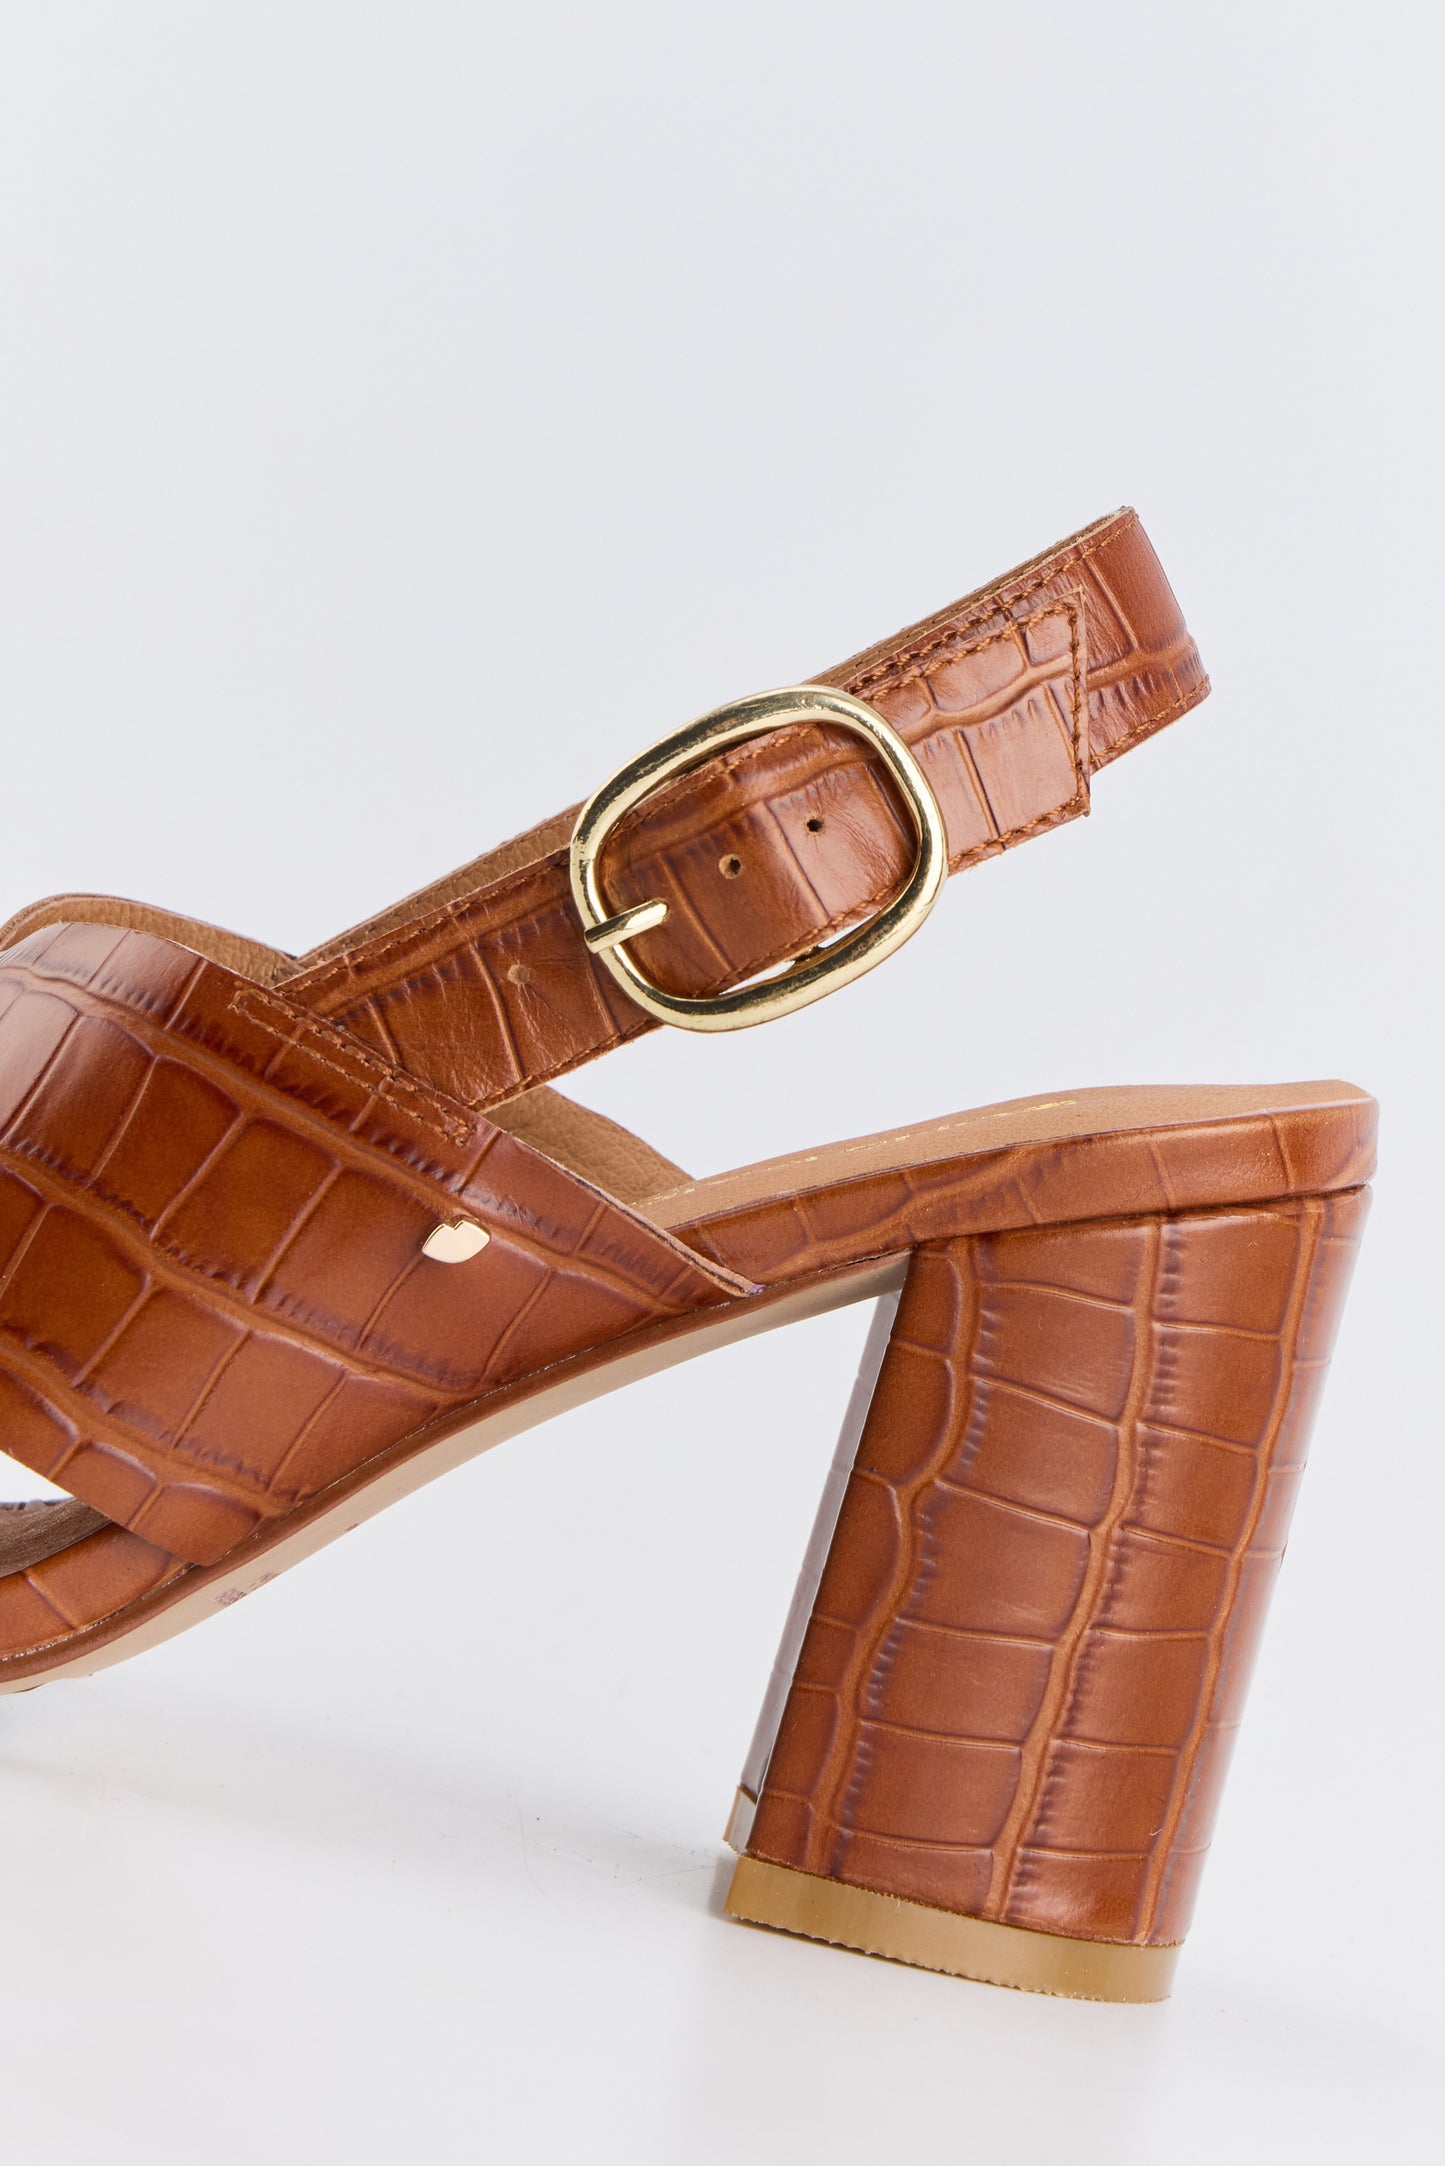 Claudia-Croc Cognac style leather